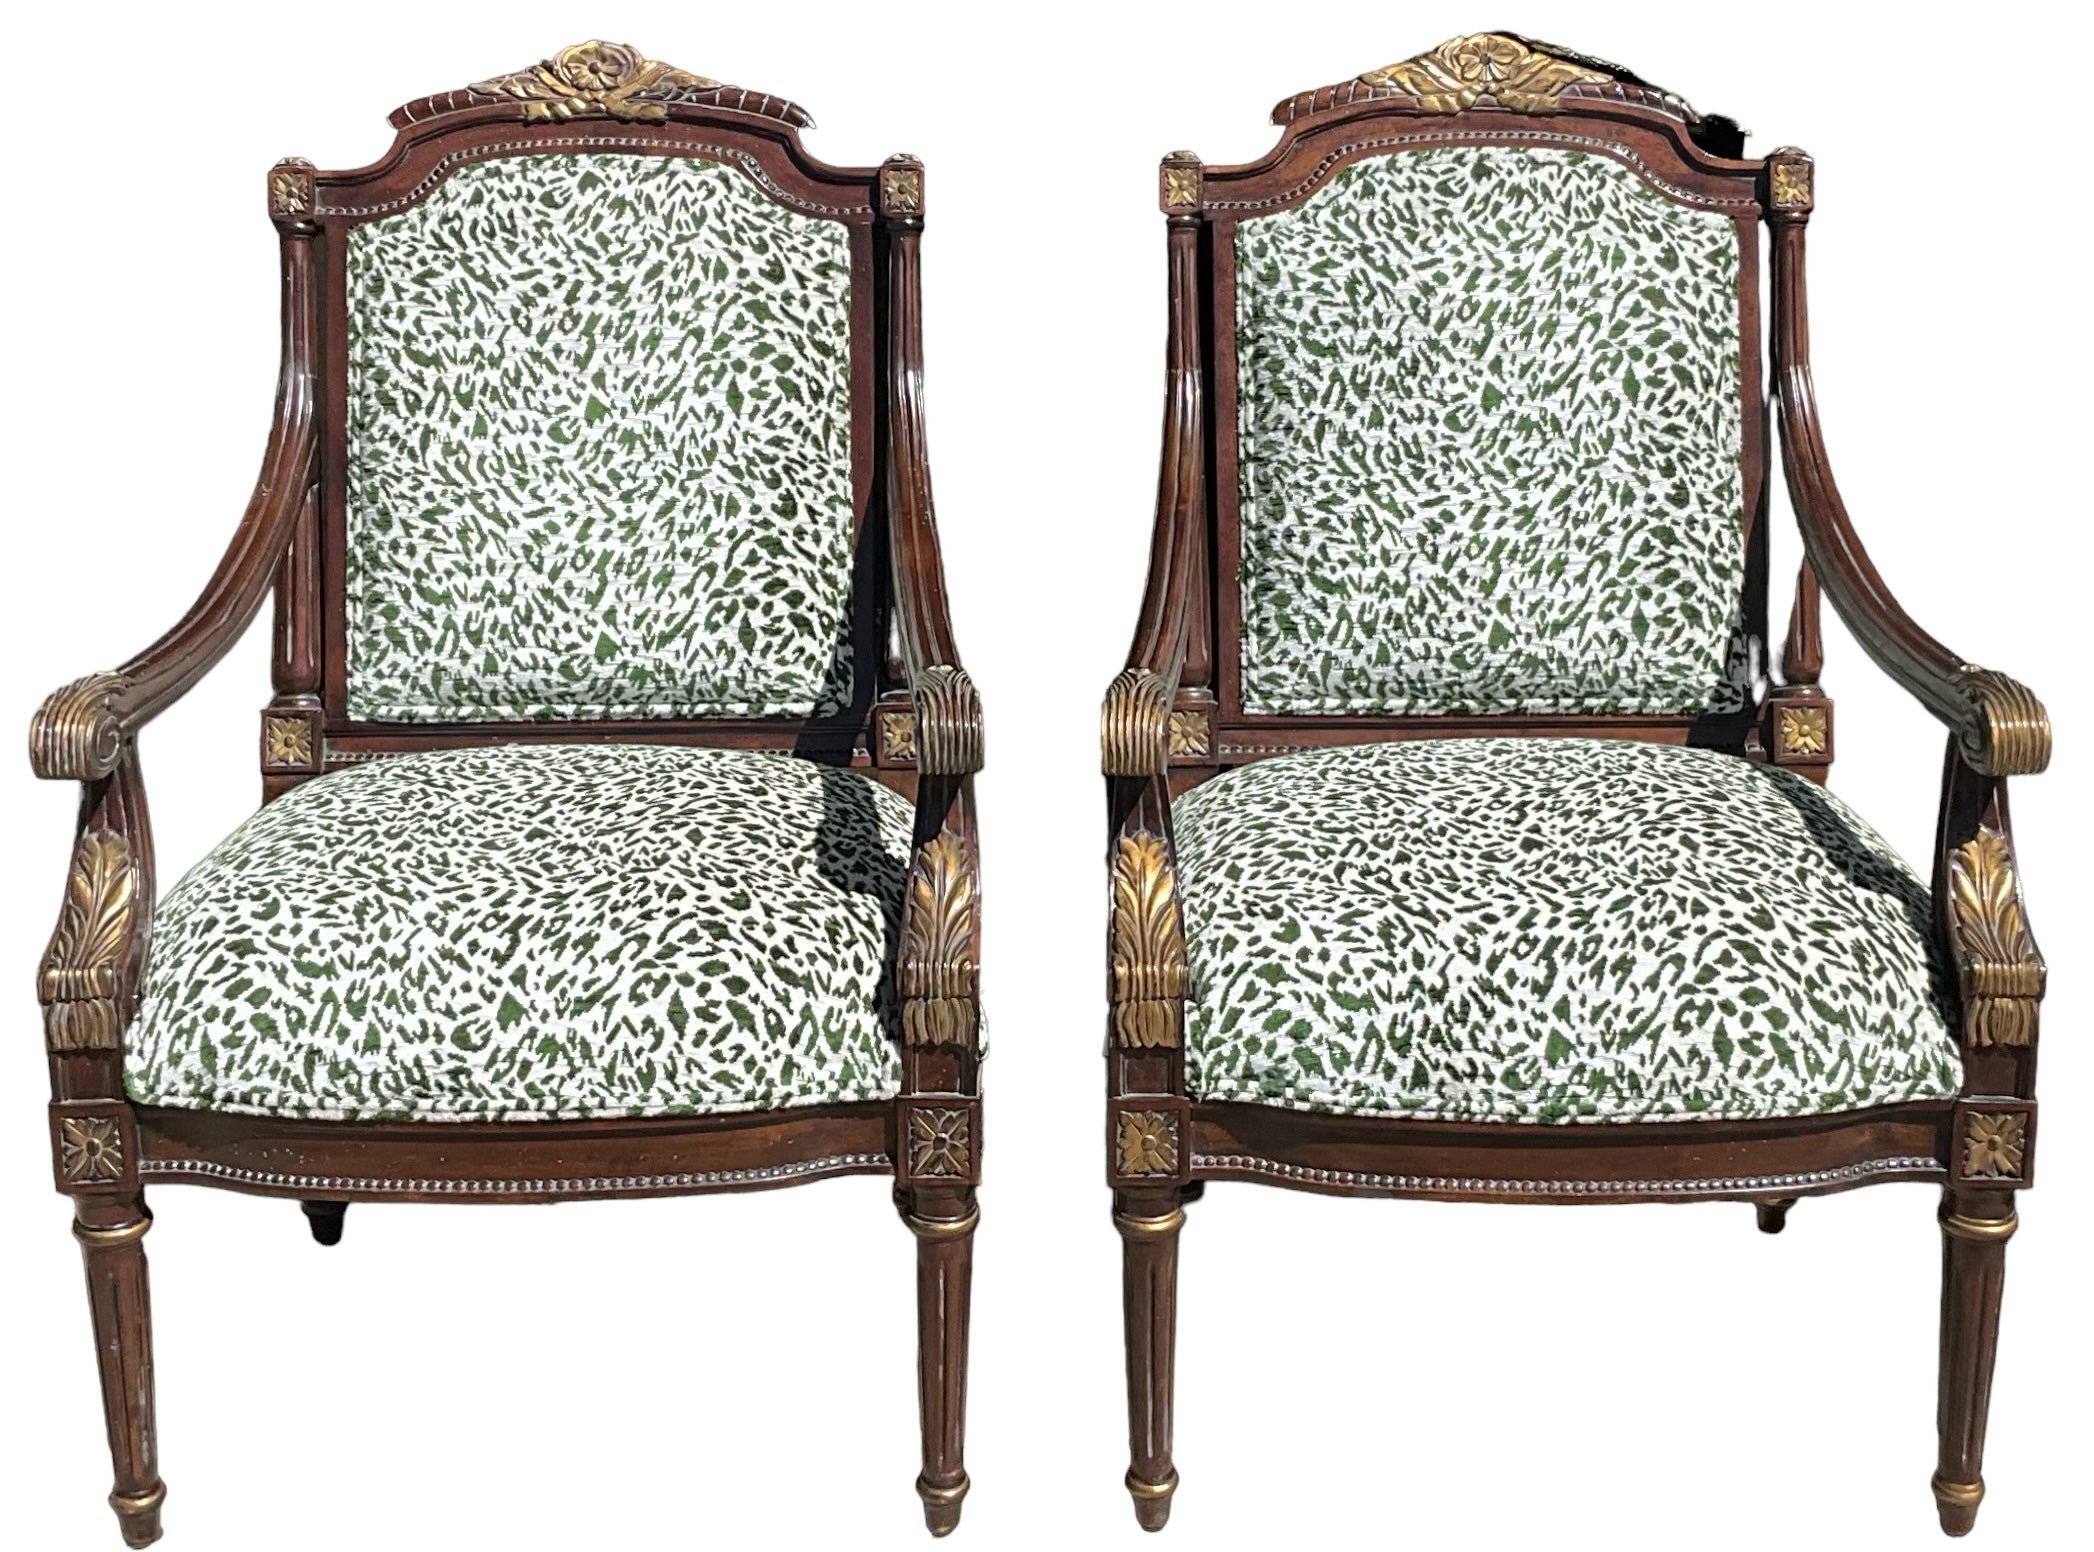 Französisch Louis XVI-Stil Mahagoni & Giltwood Bergere Stühle in grünem Samt - Paar